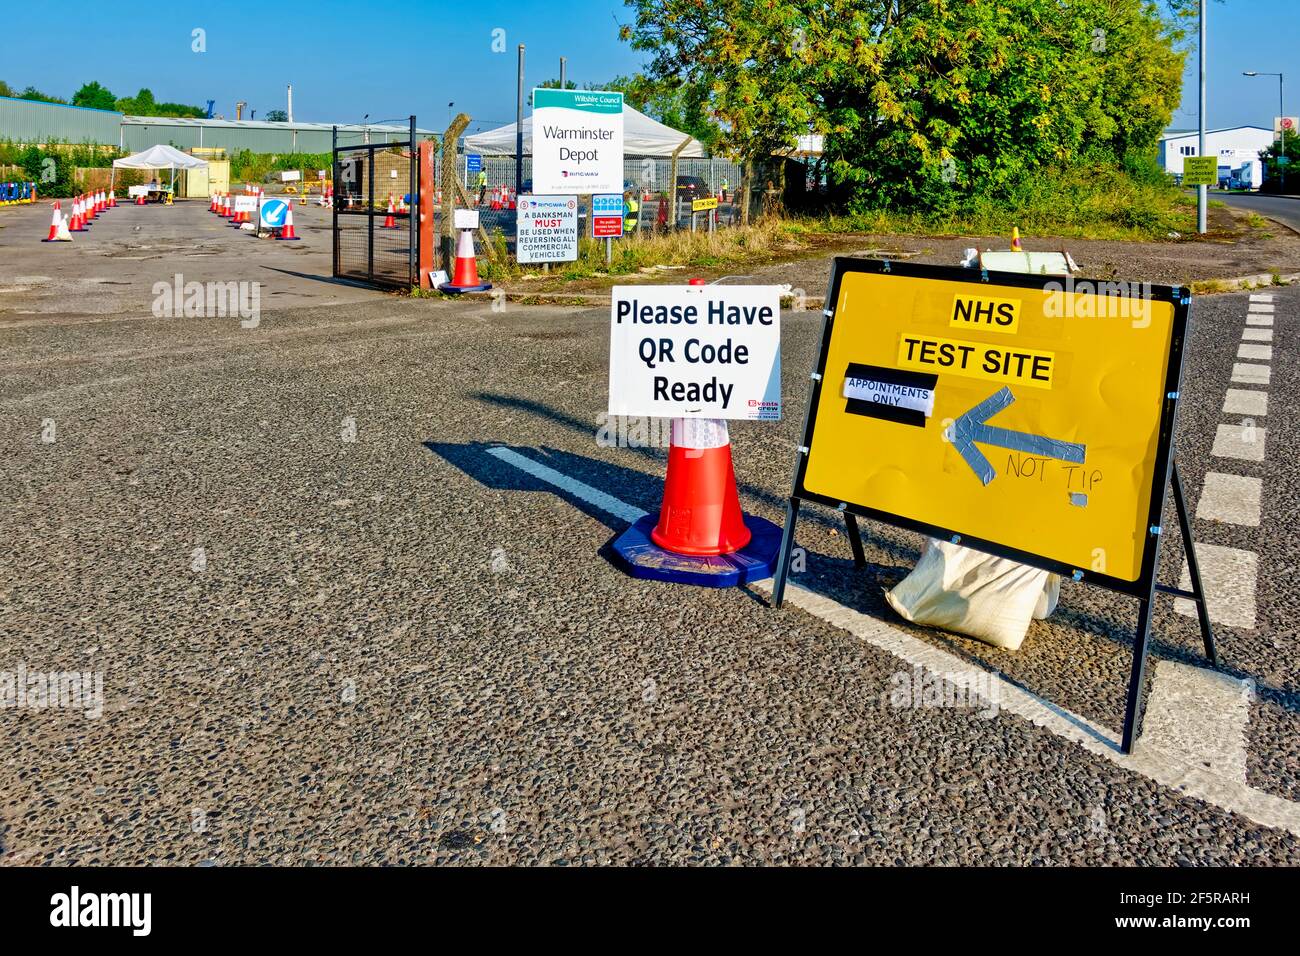 Warminster, Wiltshire  UK - September 22 2020: The Coronavirus NHS Test Site in Furnax Lane, Bath Road, Warminster, England Stock Photo